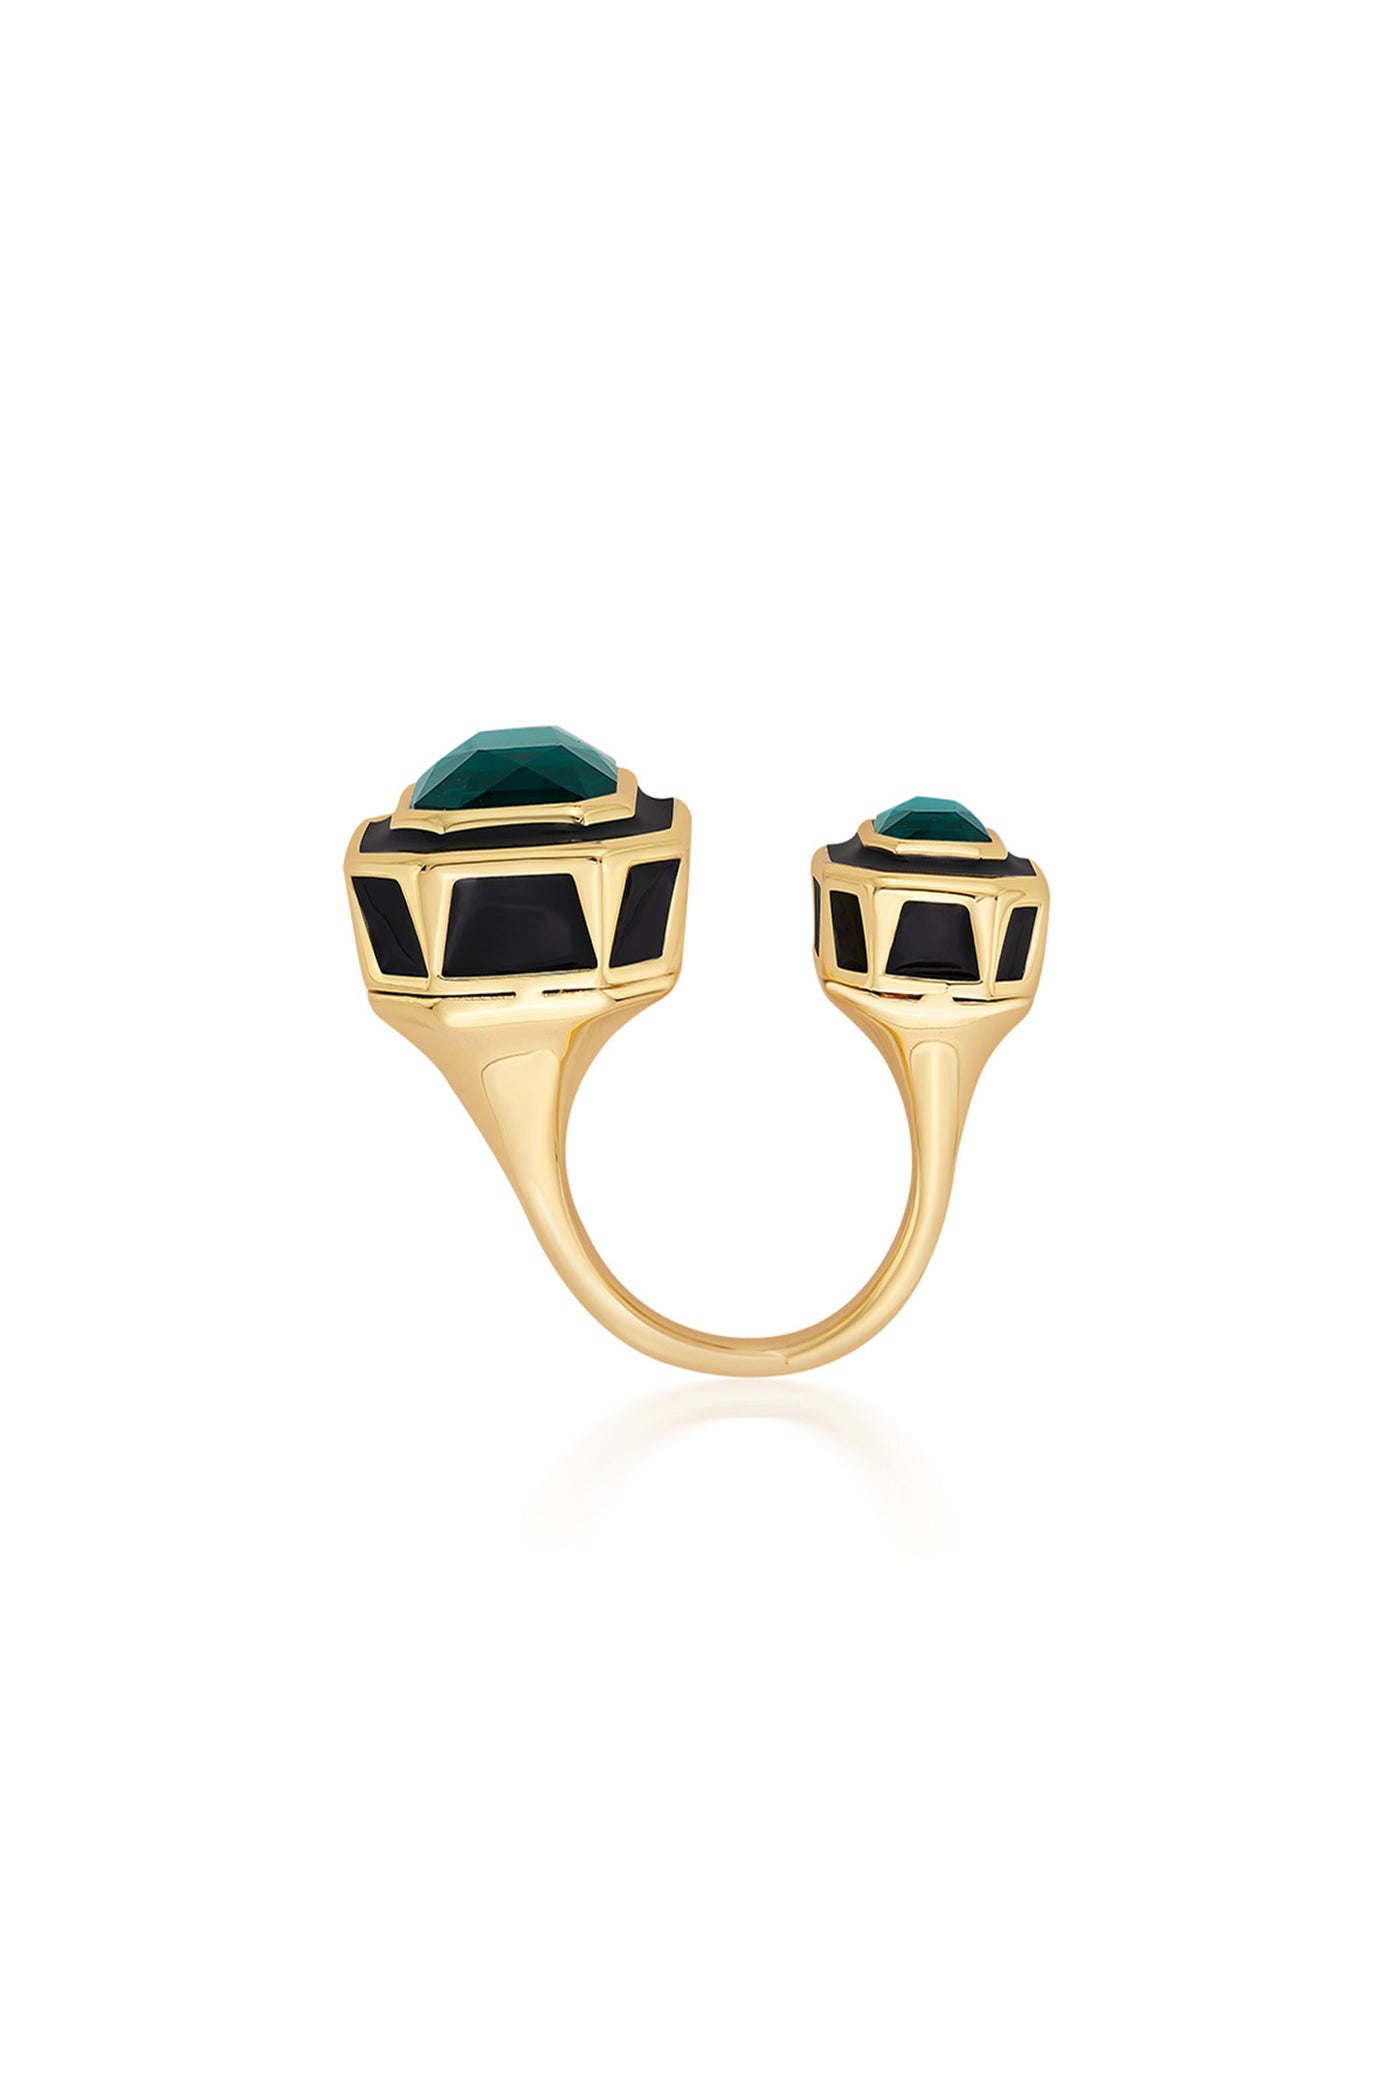 Isharya B-dazzle Dual Crystal Ring In 18Kt Gold Plated fashion jewellery online shopping melange singapore indian designer wear